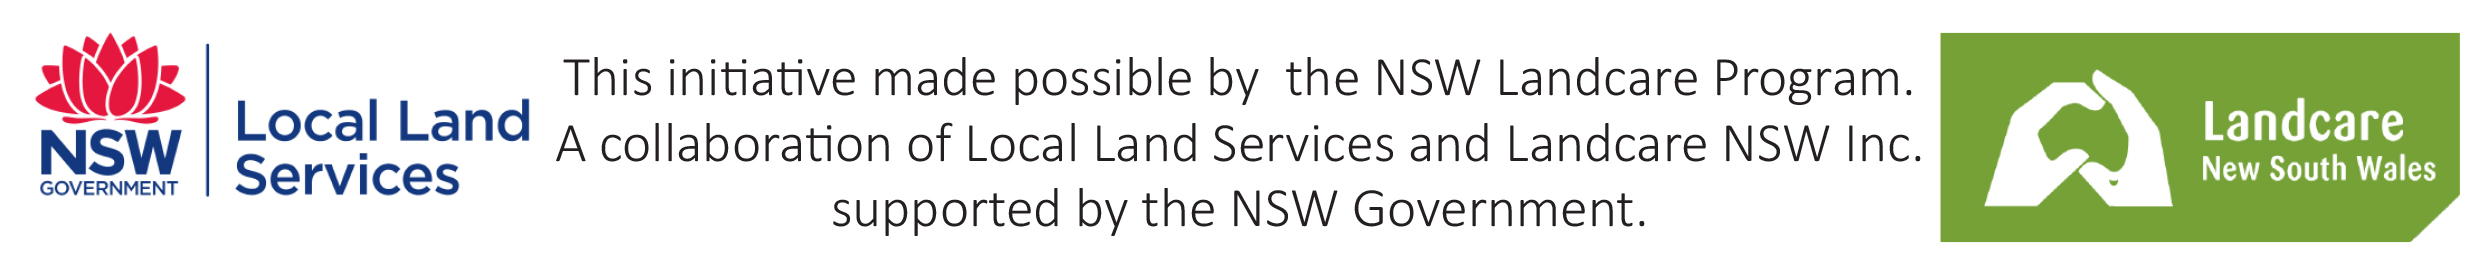 NSW Landcare Program Acknowledgement Stack 3.jpg